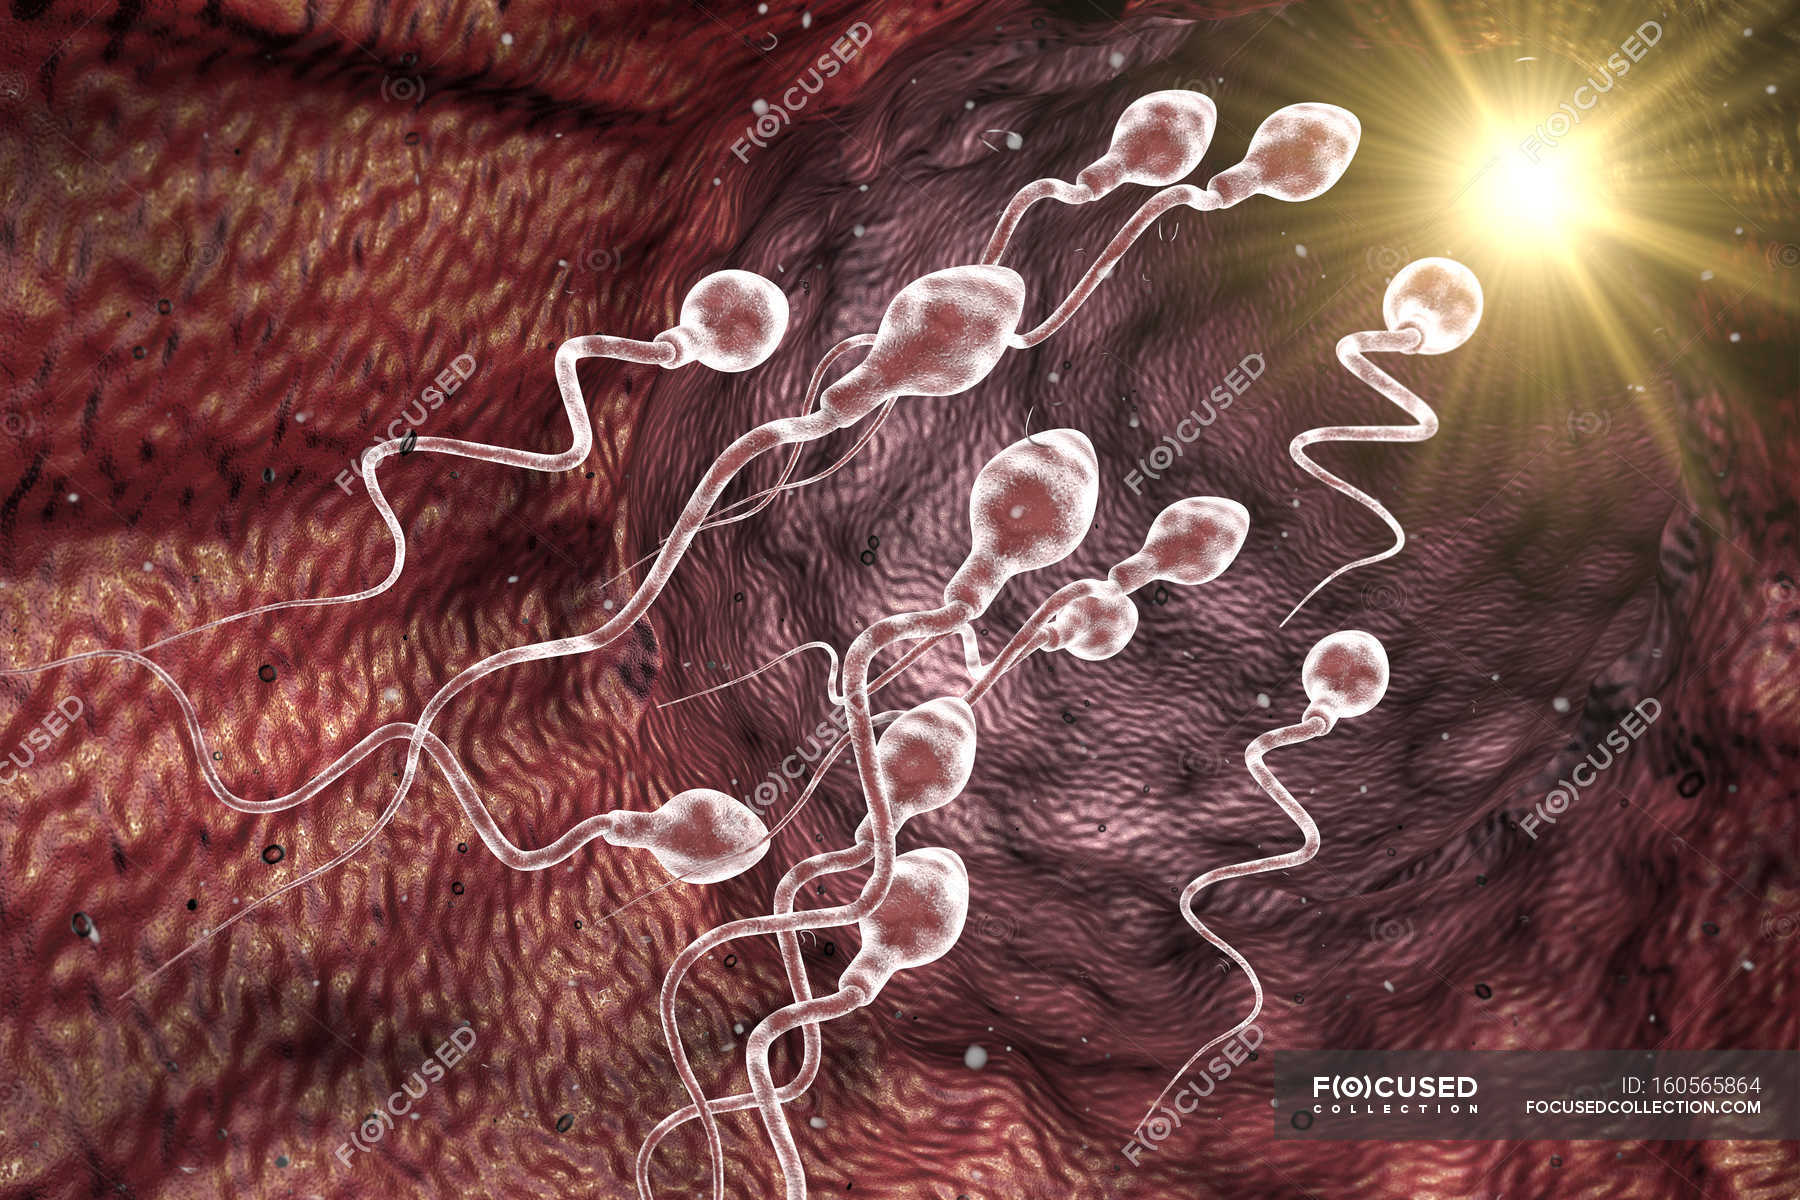 мужик сперма в матку фото 89